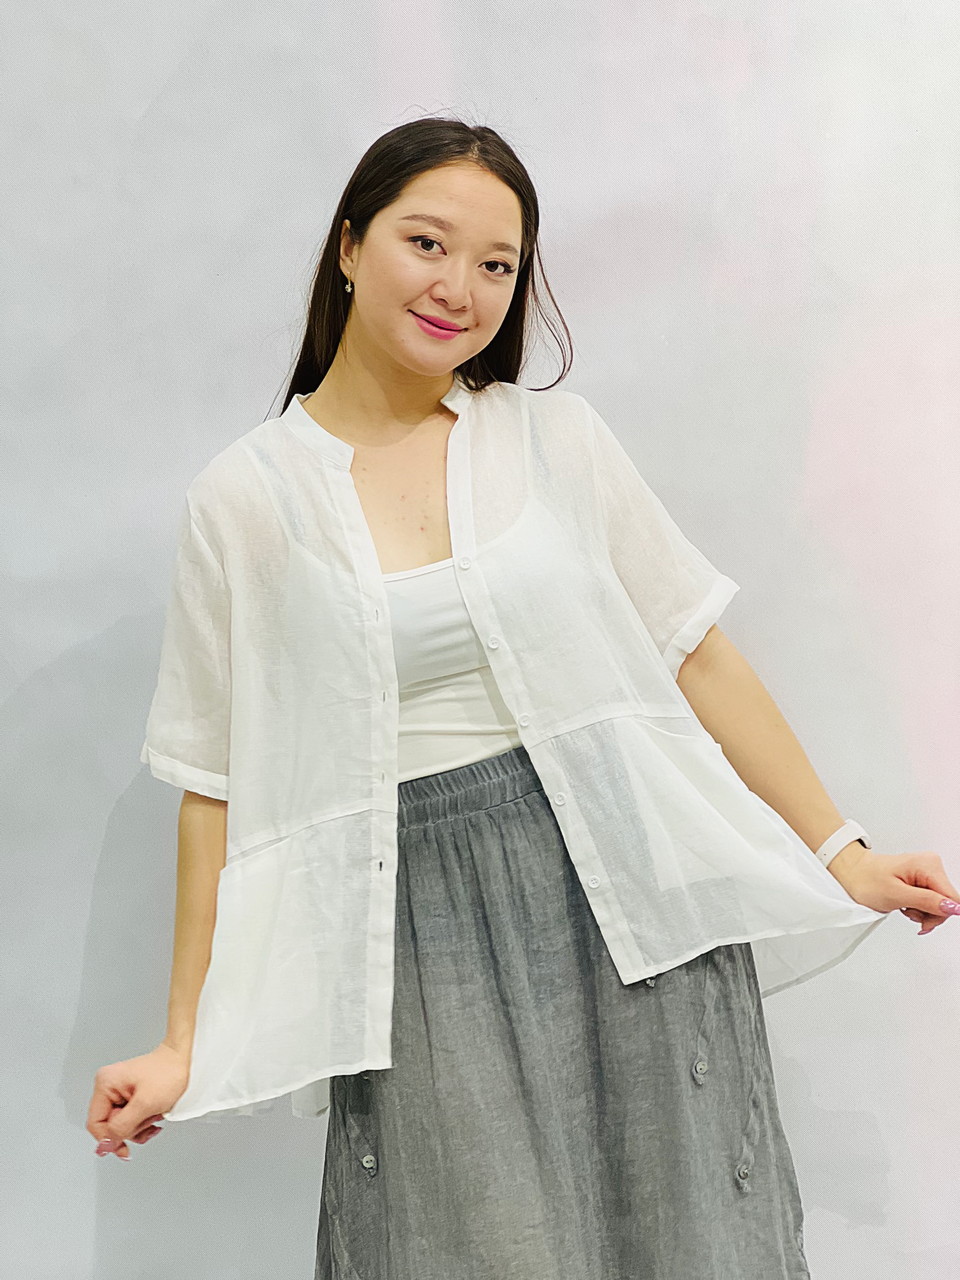 Женская блузка Angel / Размер: Free size. Цвет: Белый. Состав: Лен.